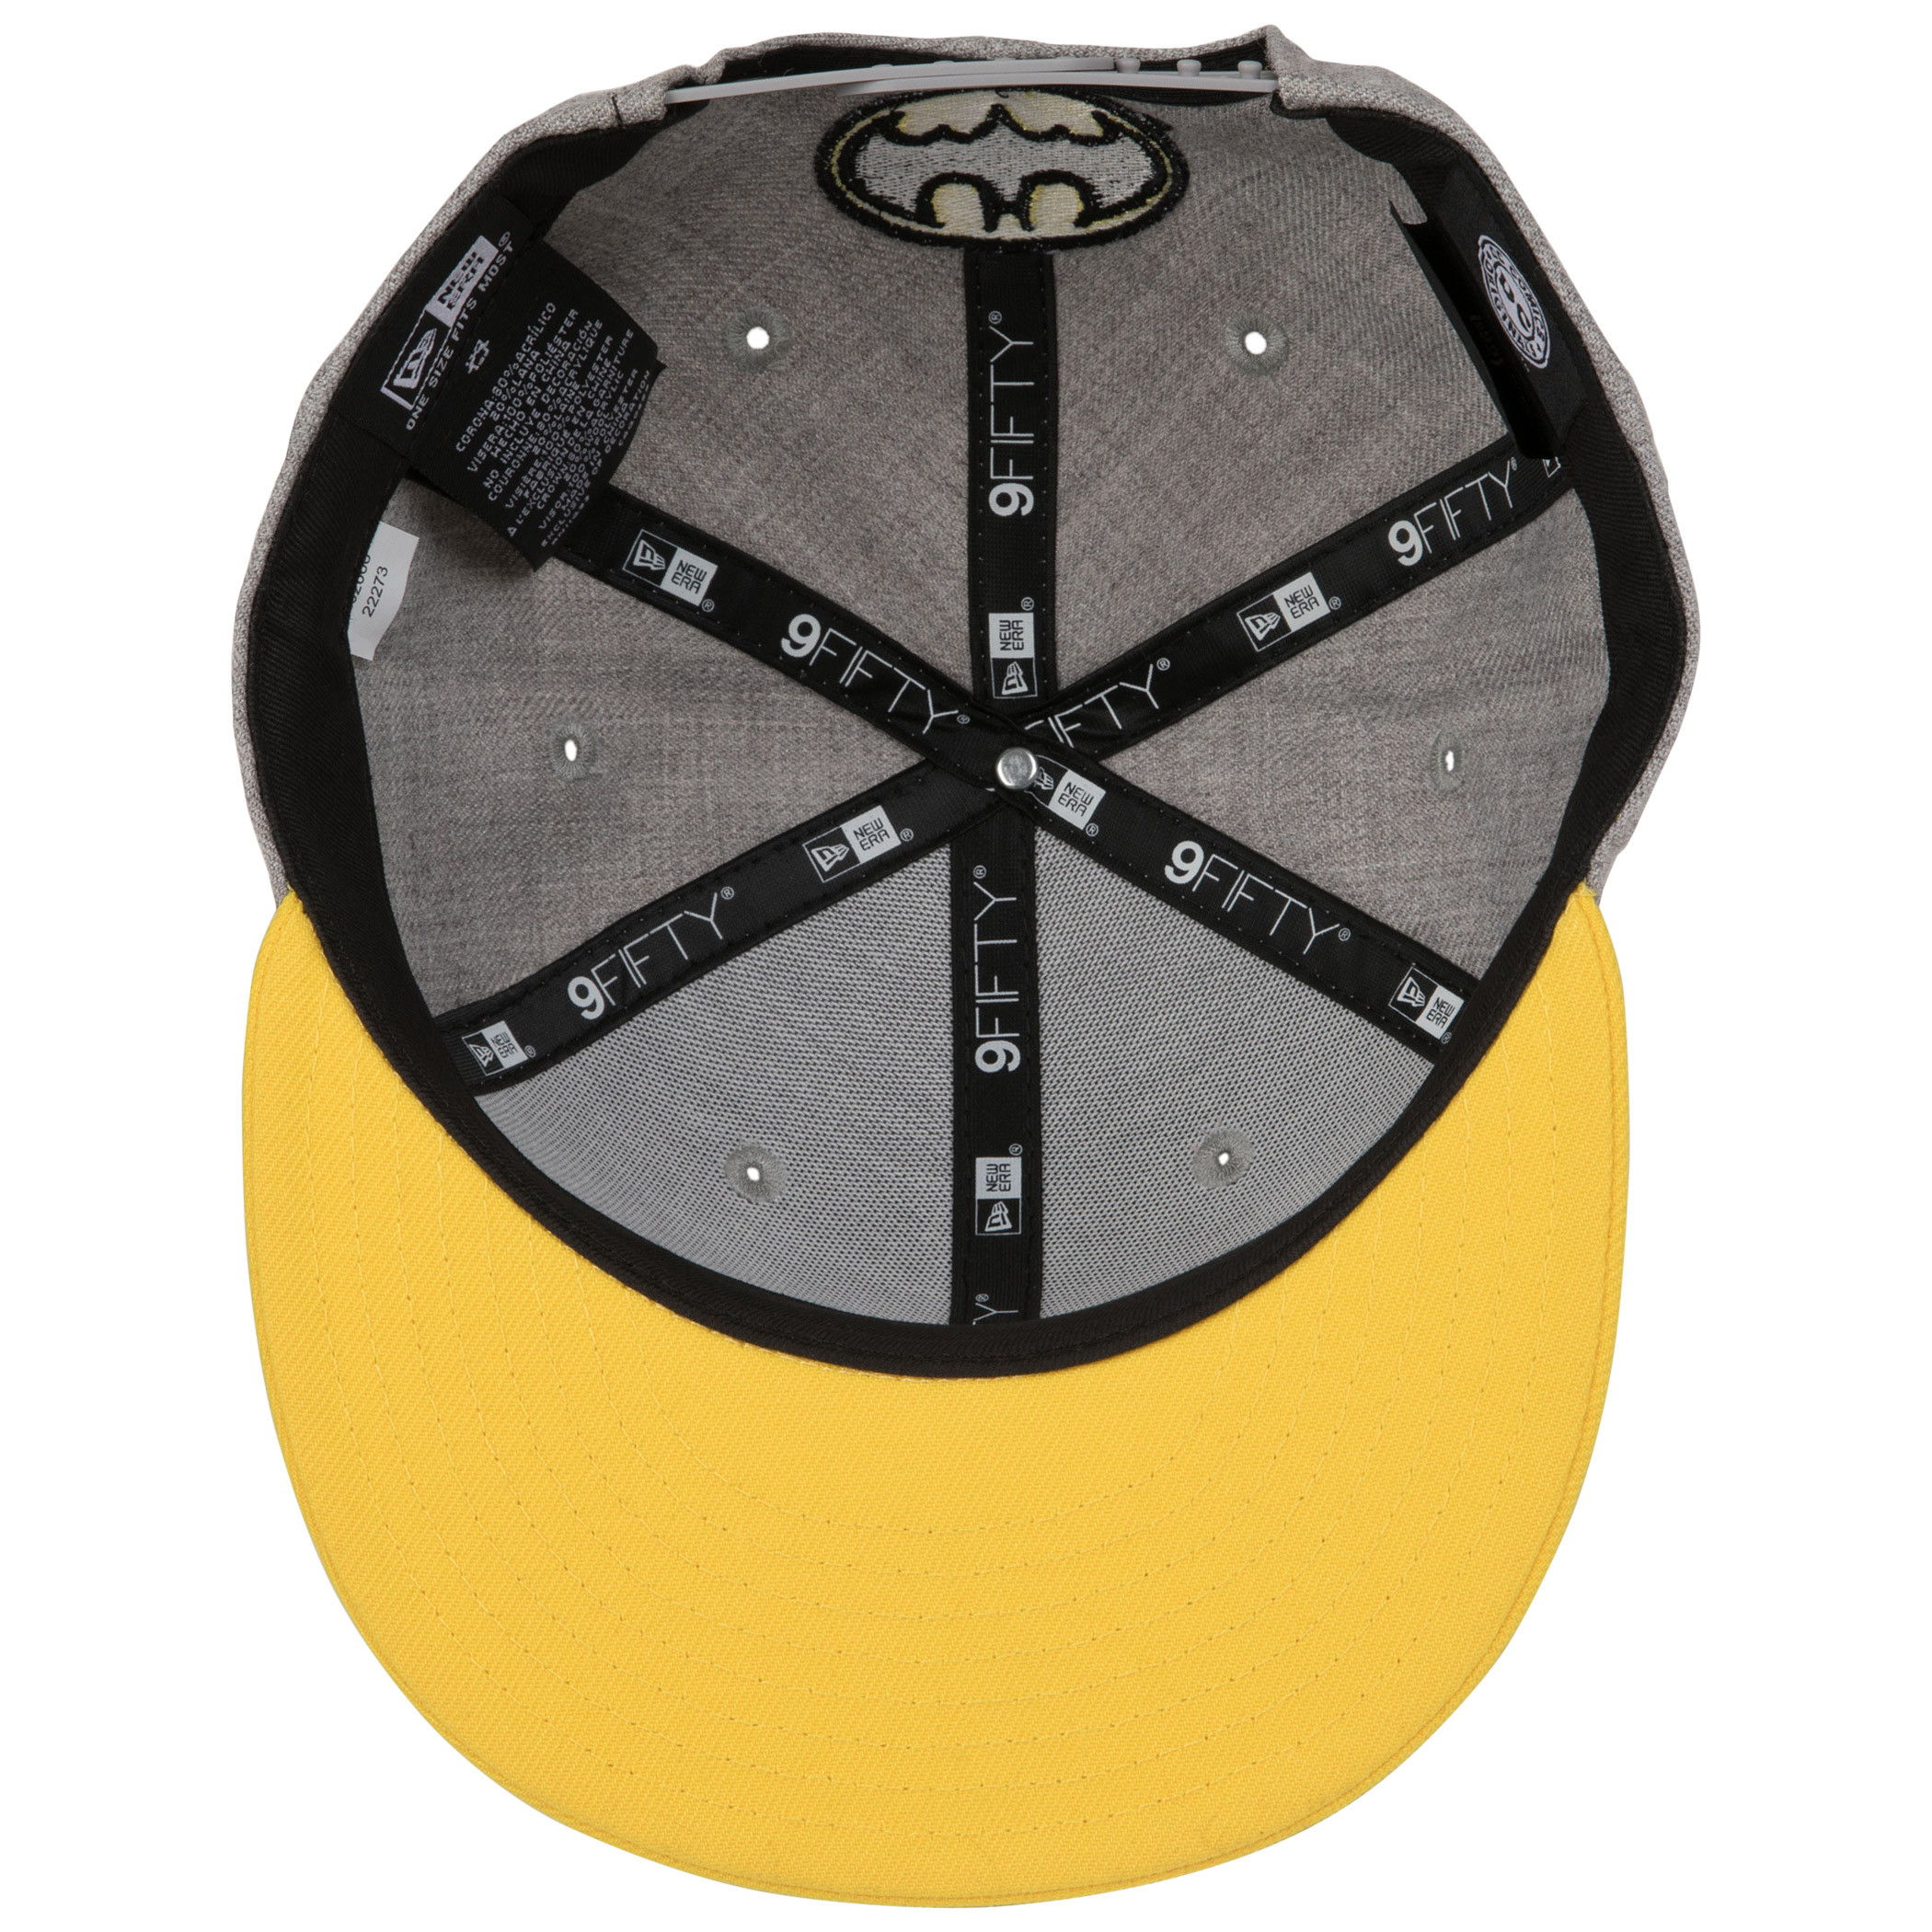 Batman Symbol Heathered New Era 9Fifty Adjustable Hat